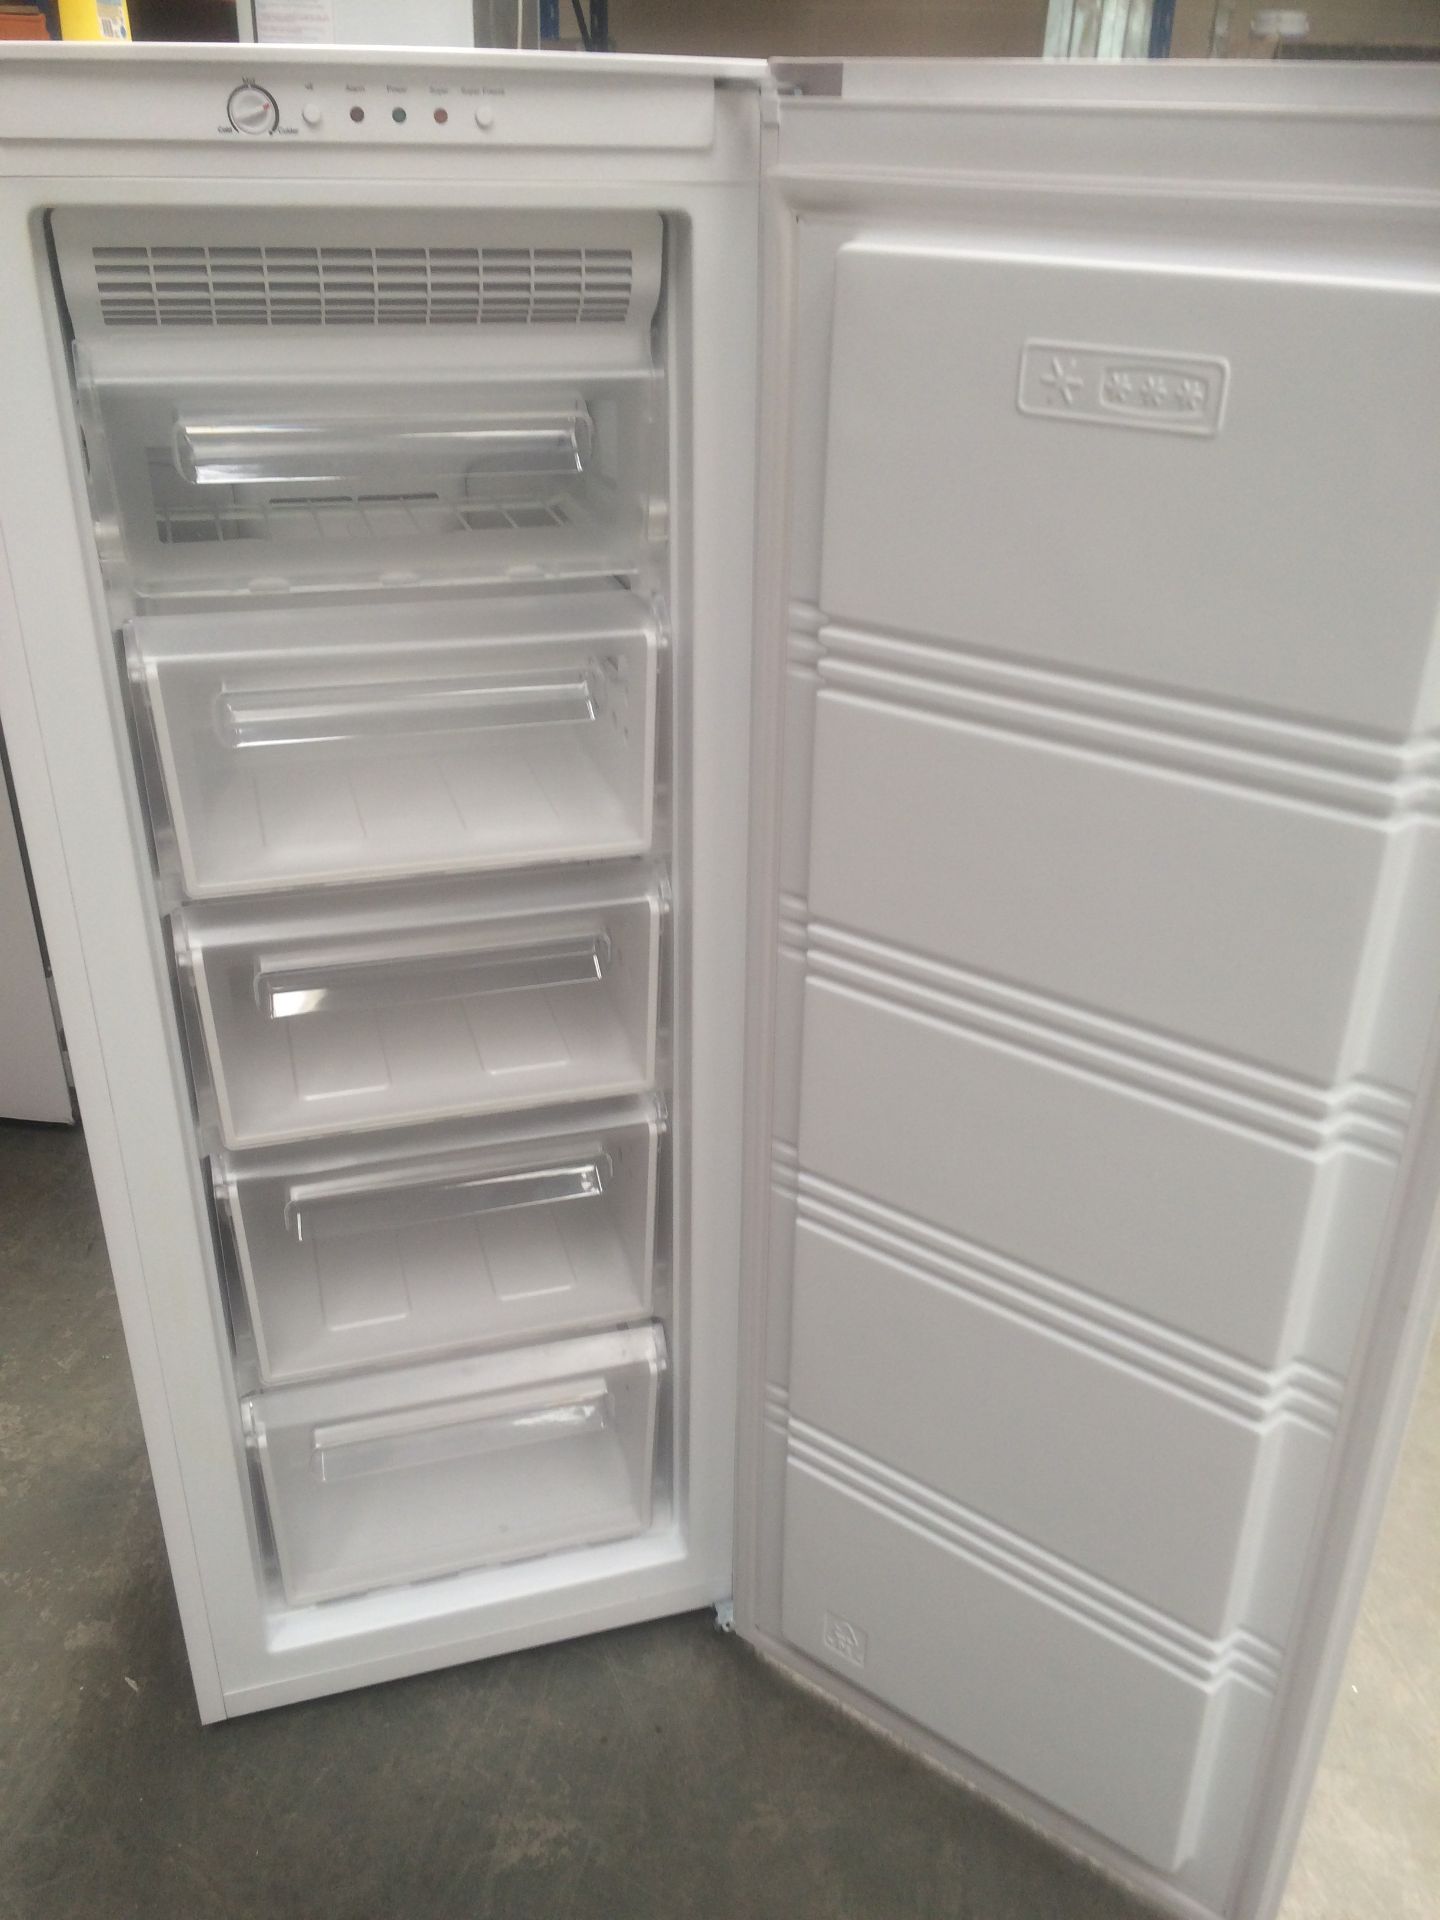 Fridgemaster freezer working 5 compartments 550mmX550mmX1440mm high - Image 2 of 3